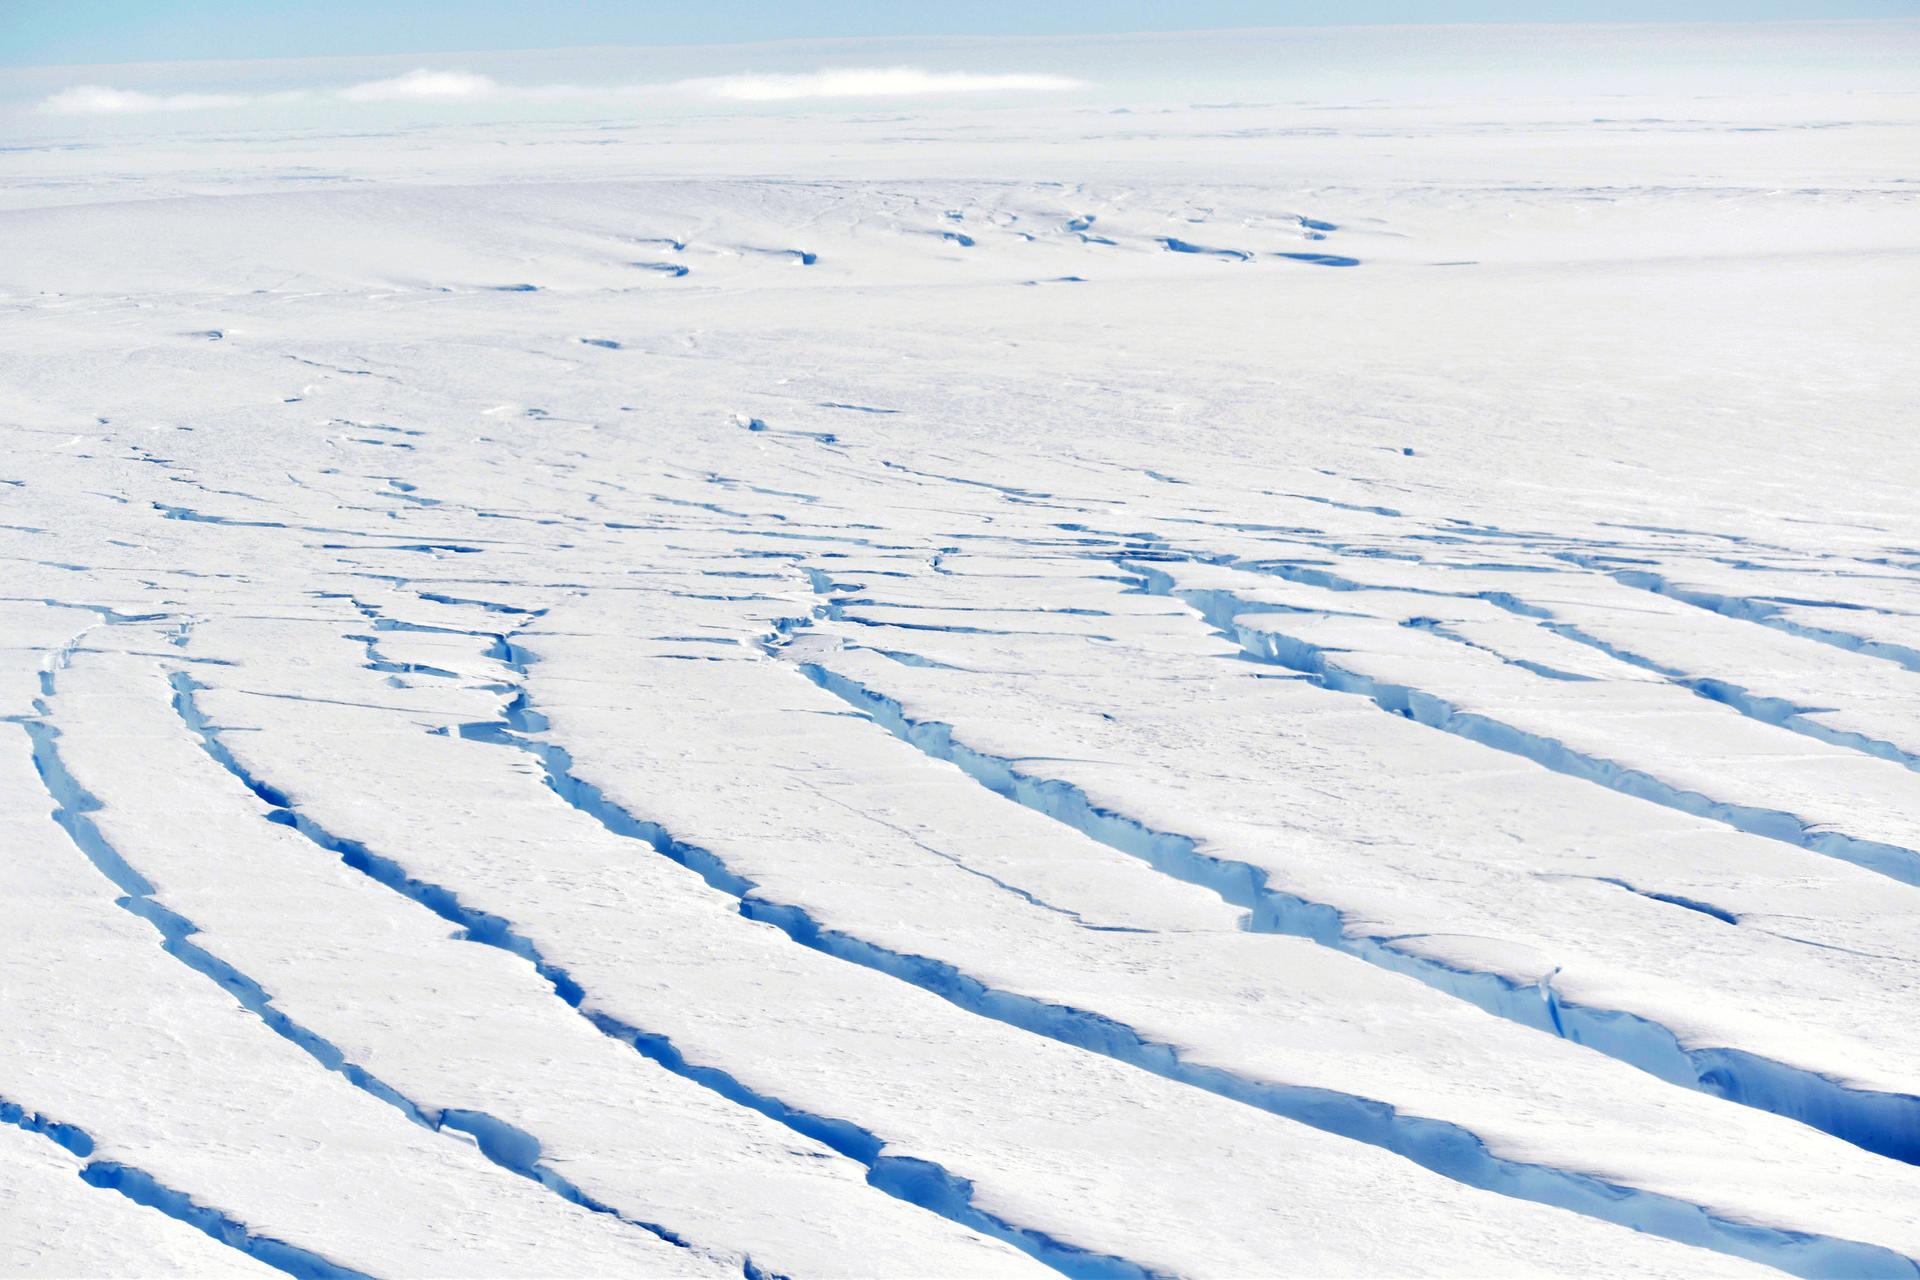 Dark blue crevasses ripple across the frozen surface of an icy white horizon